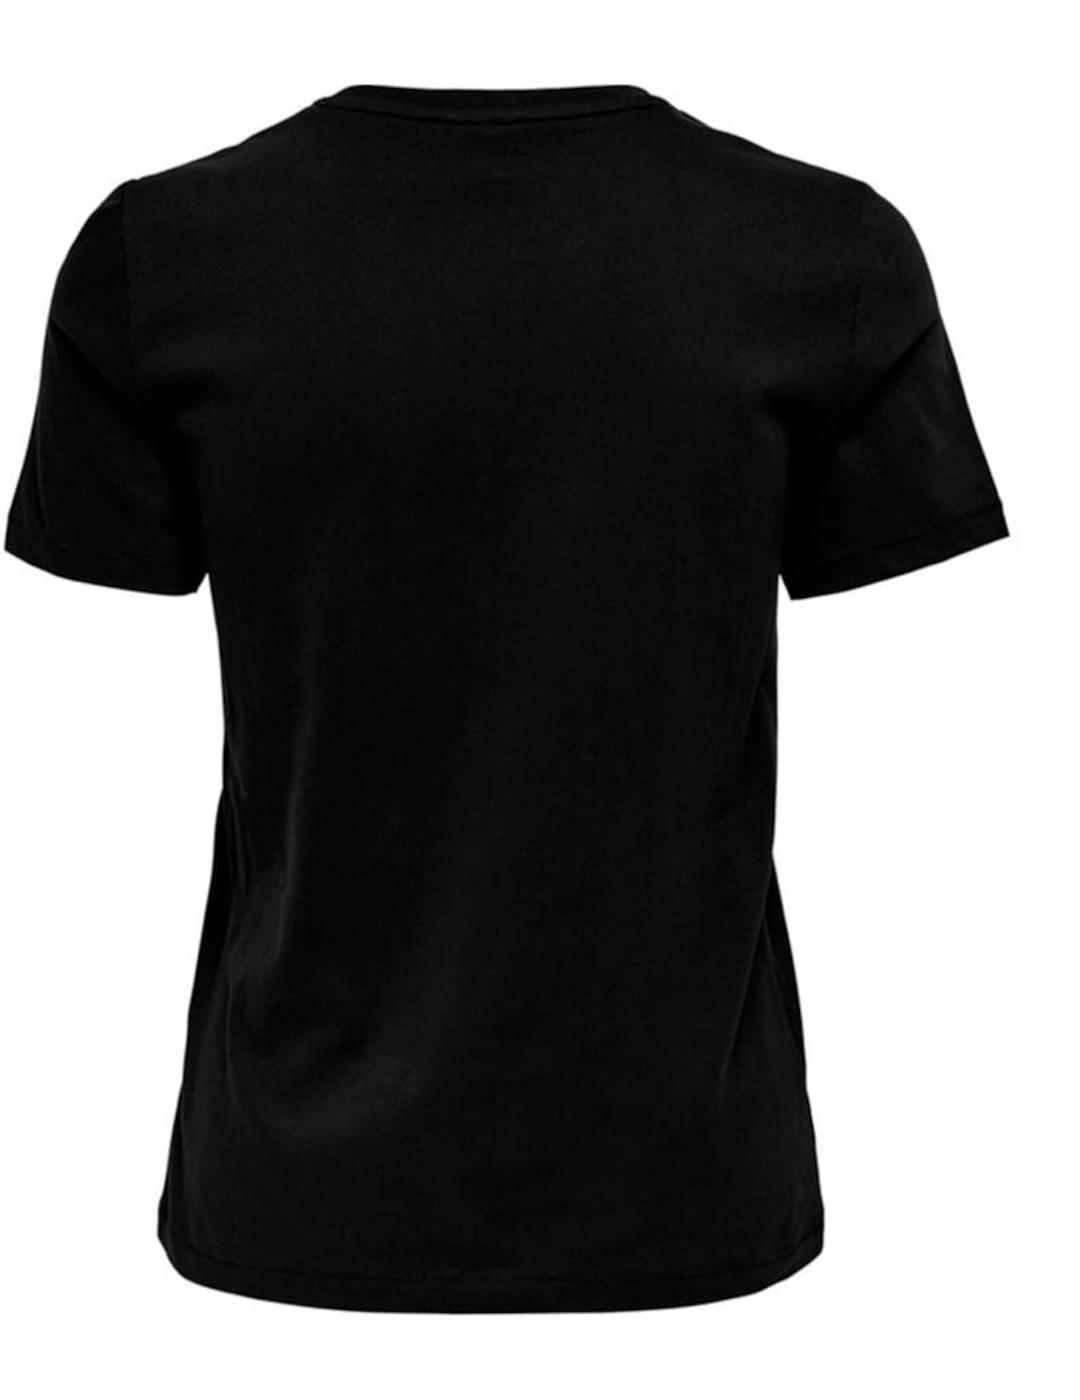 Camiseta Only negra letras cebreadas de mujer-z